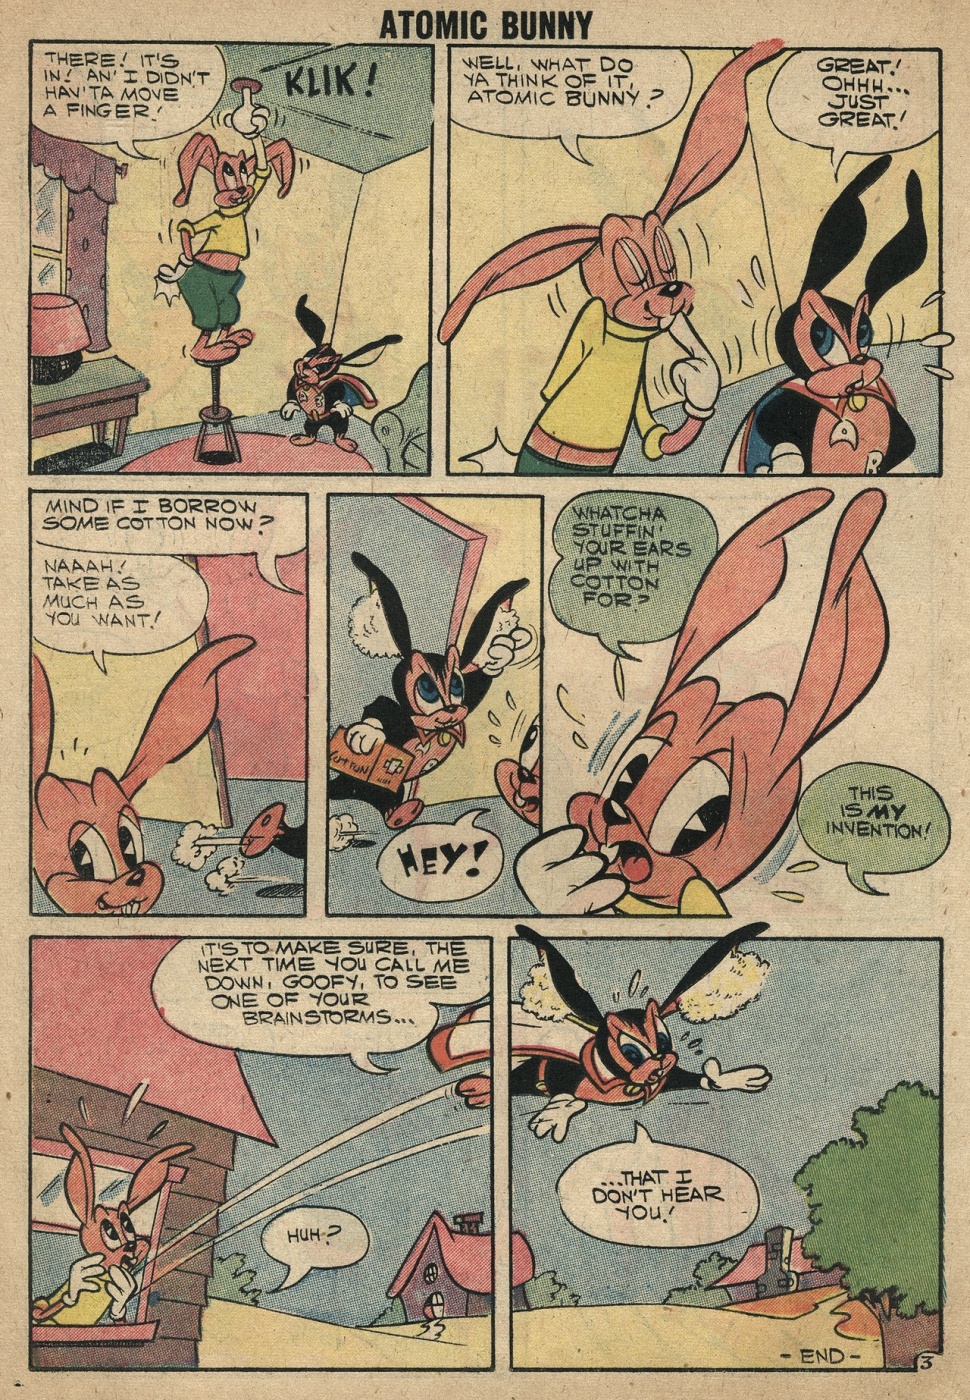 Atomic-Bunny-Comic-Strips (14)